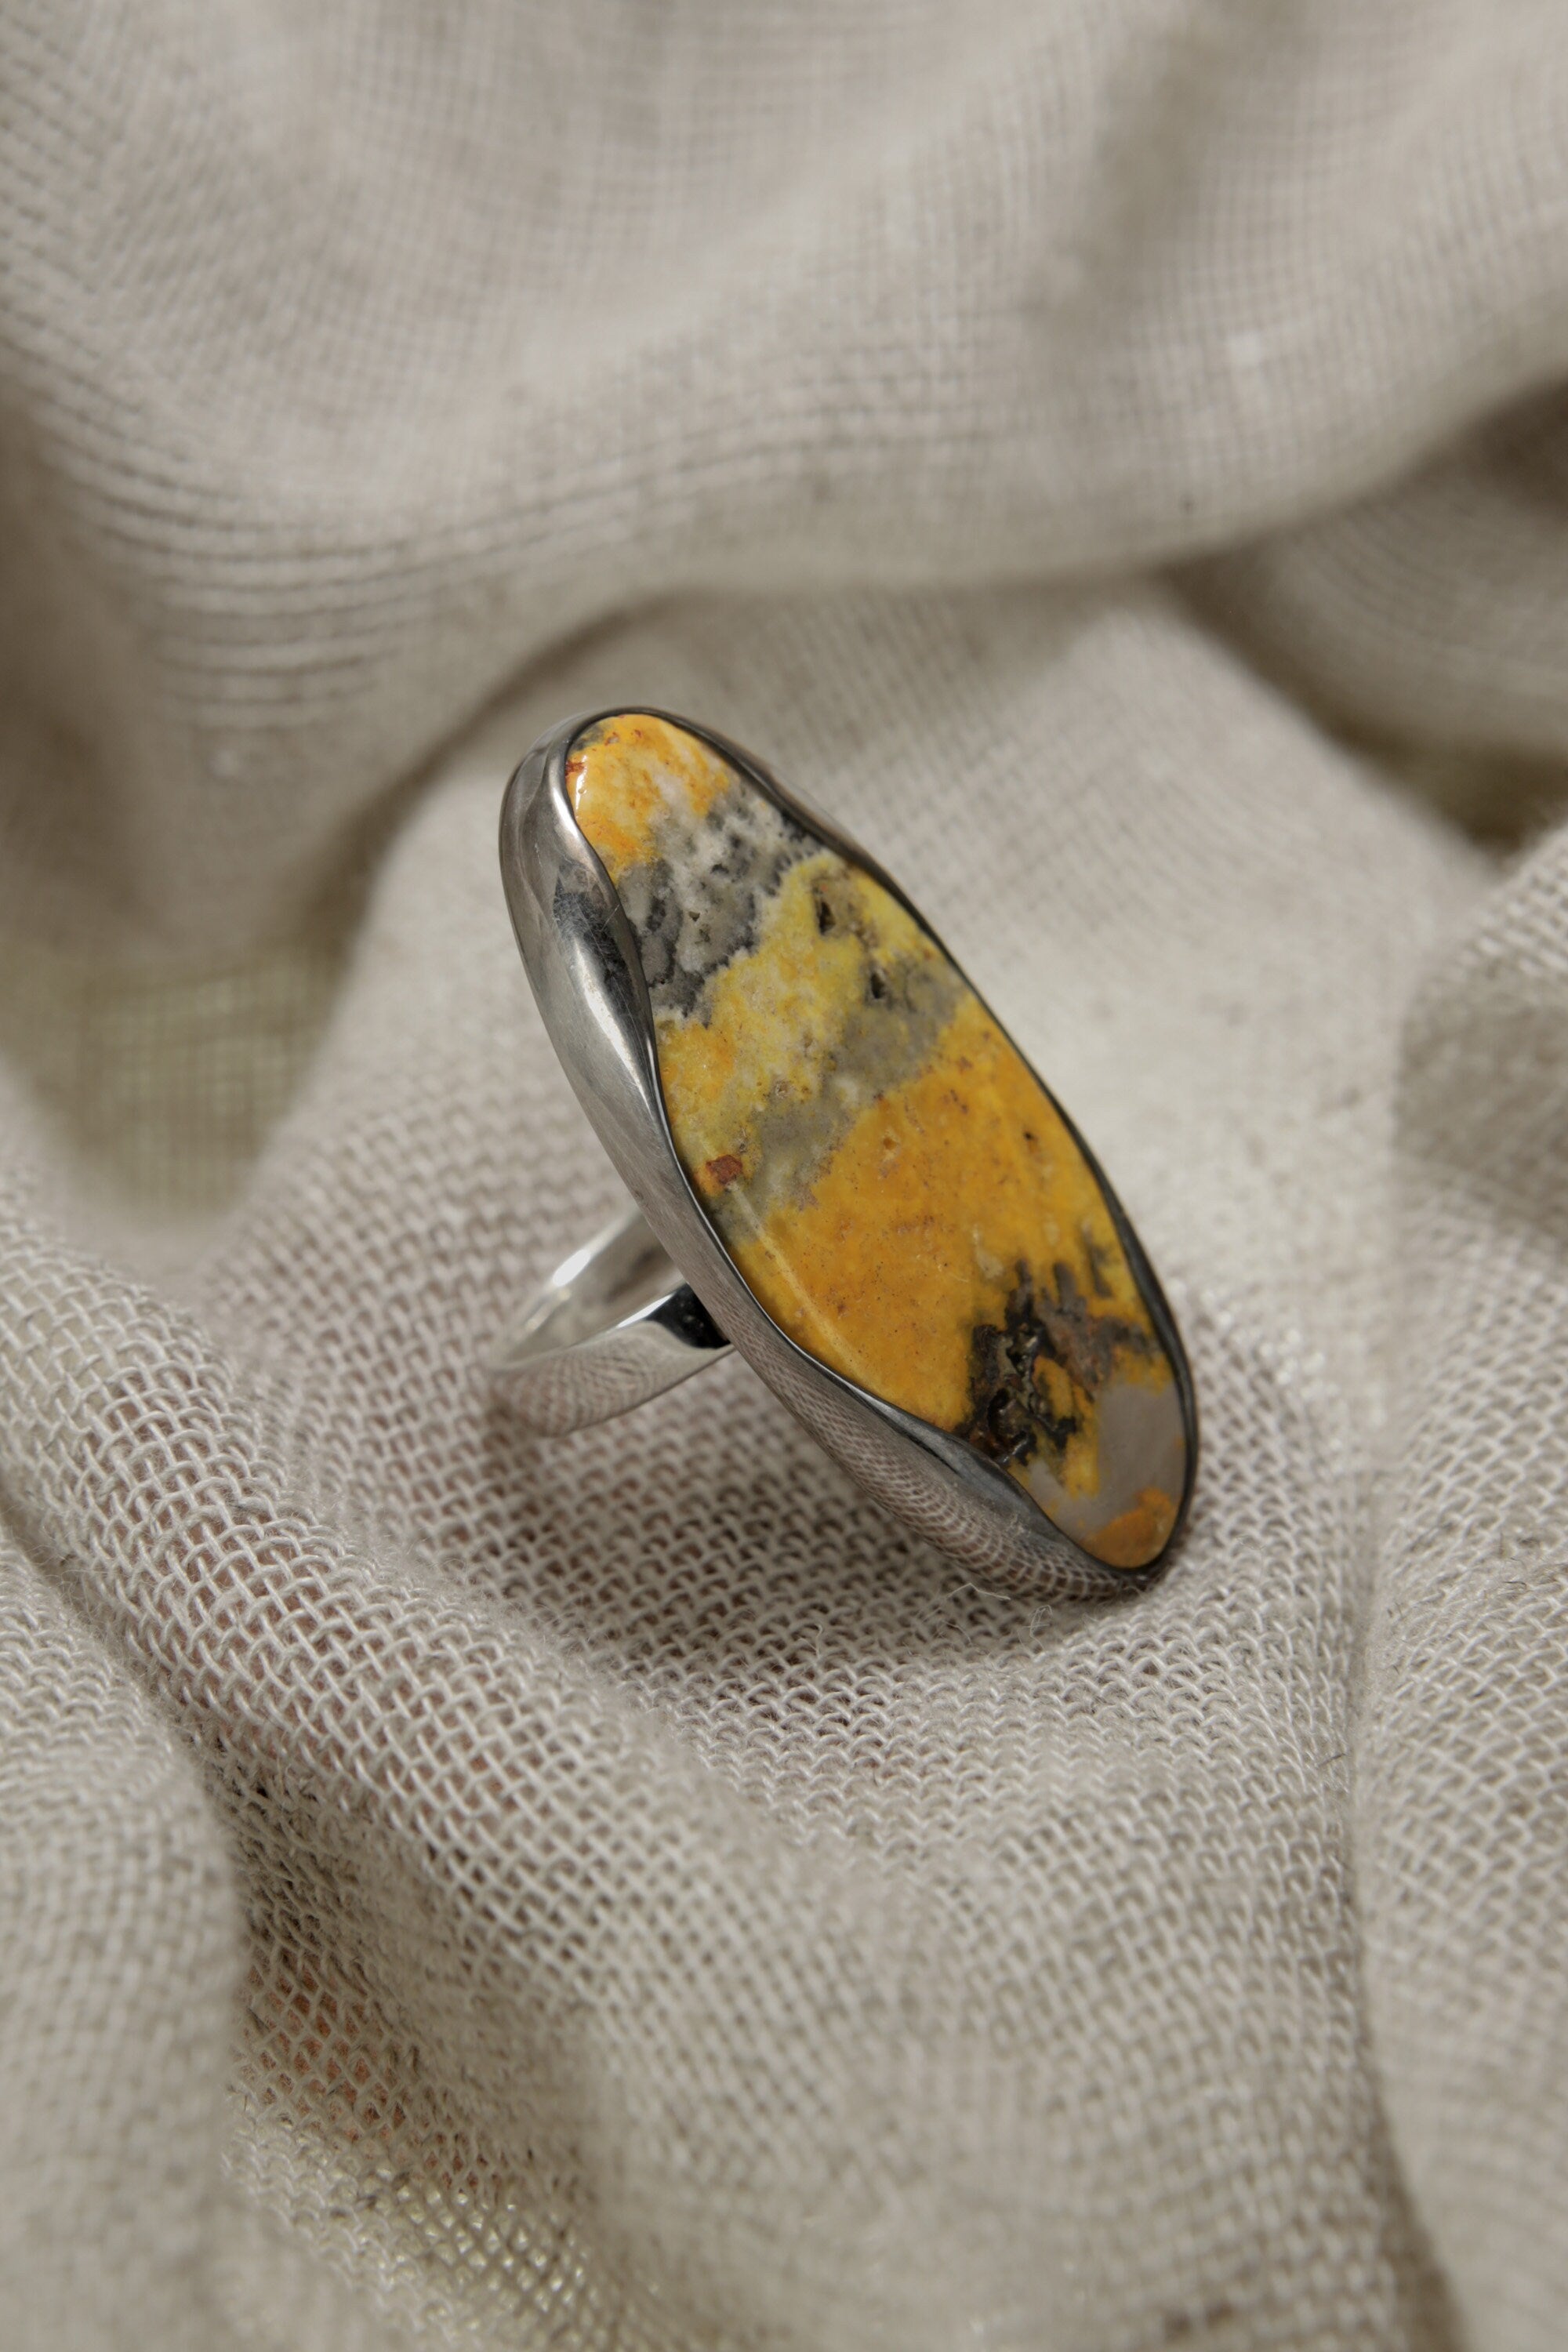 Sunburst Splendor: Adjustable Sterling Silver Ring with Bumble Bee Jasper - Unisex - Size 5-12 US